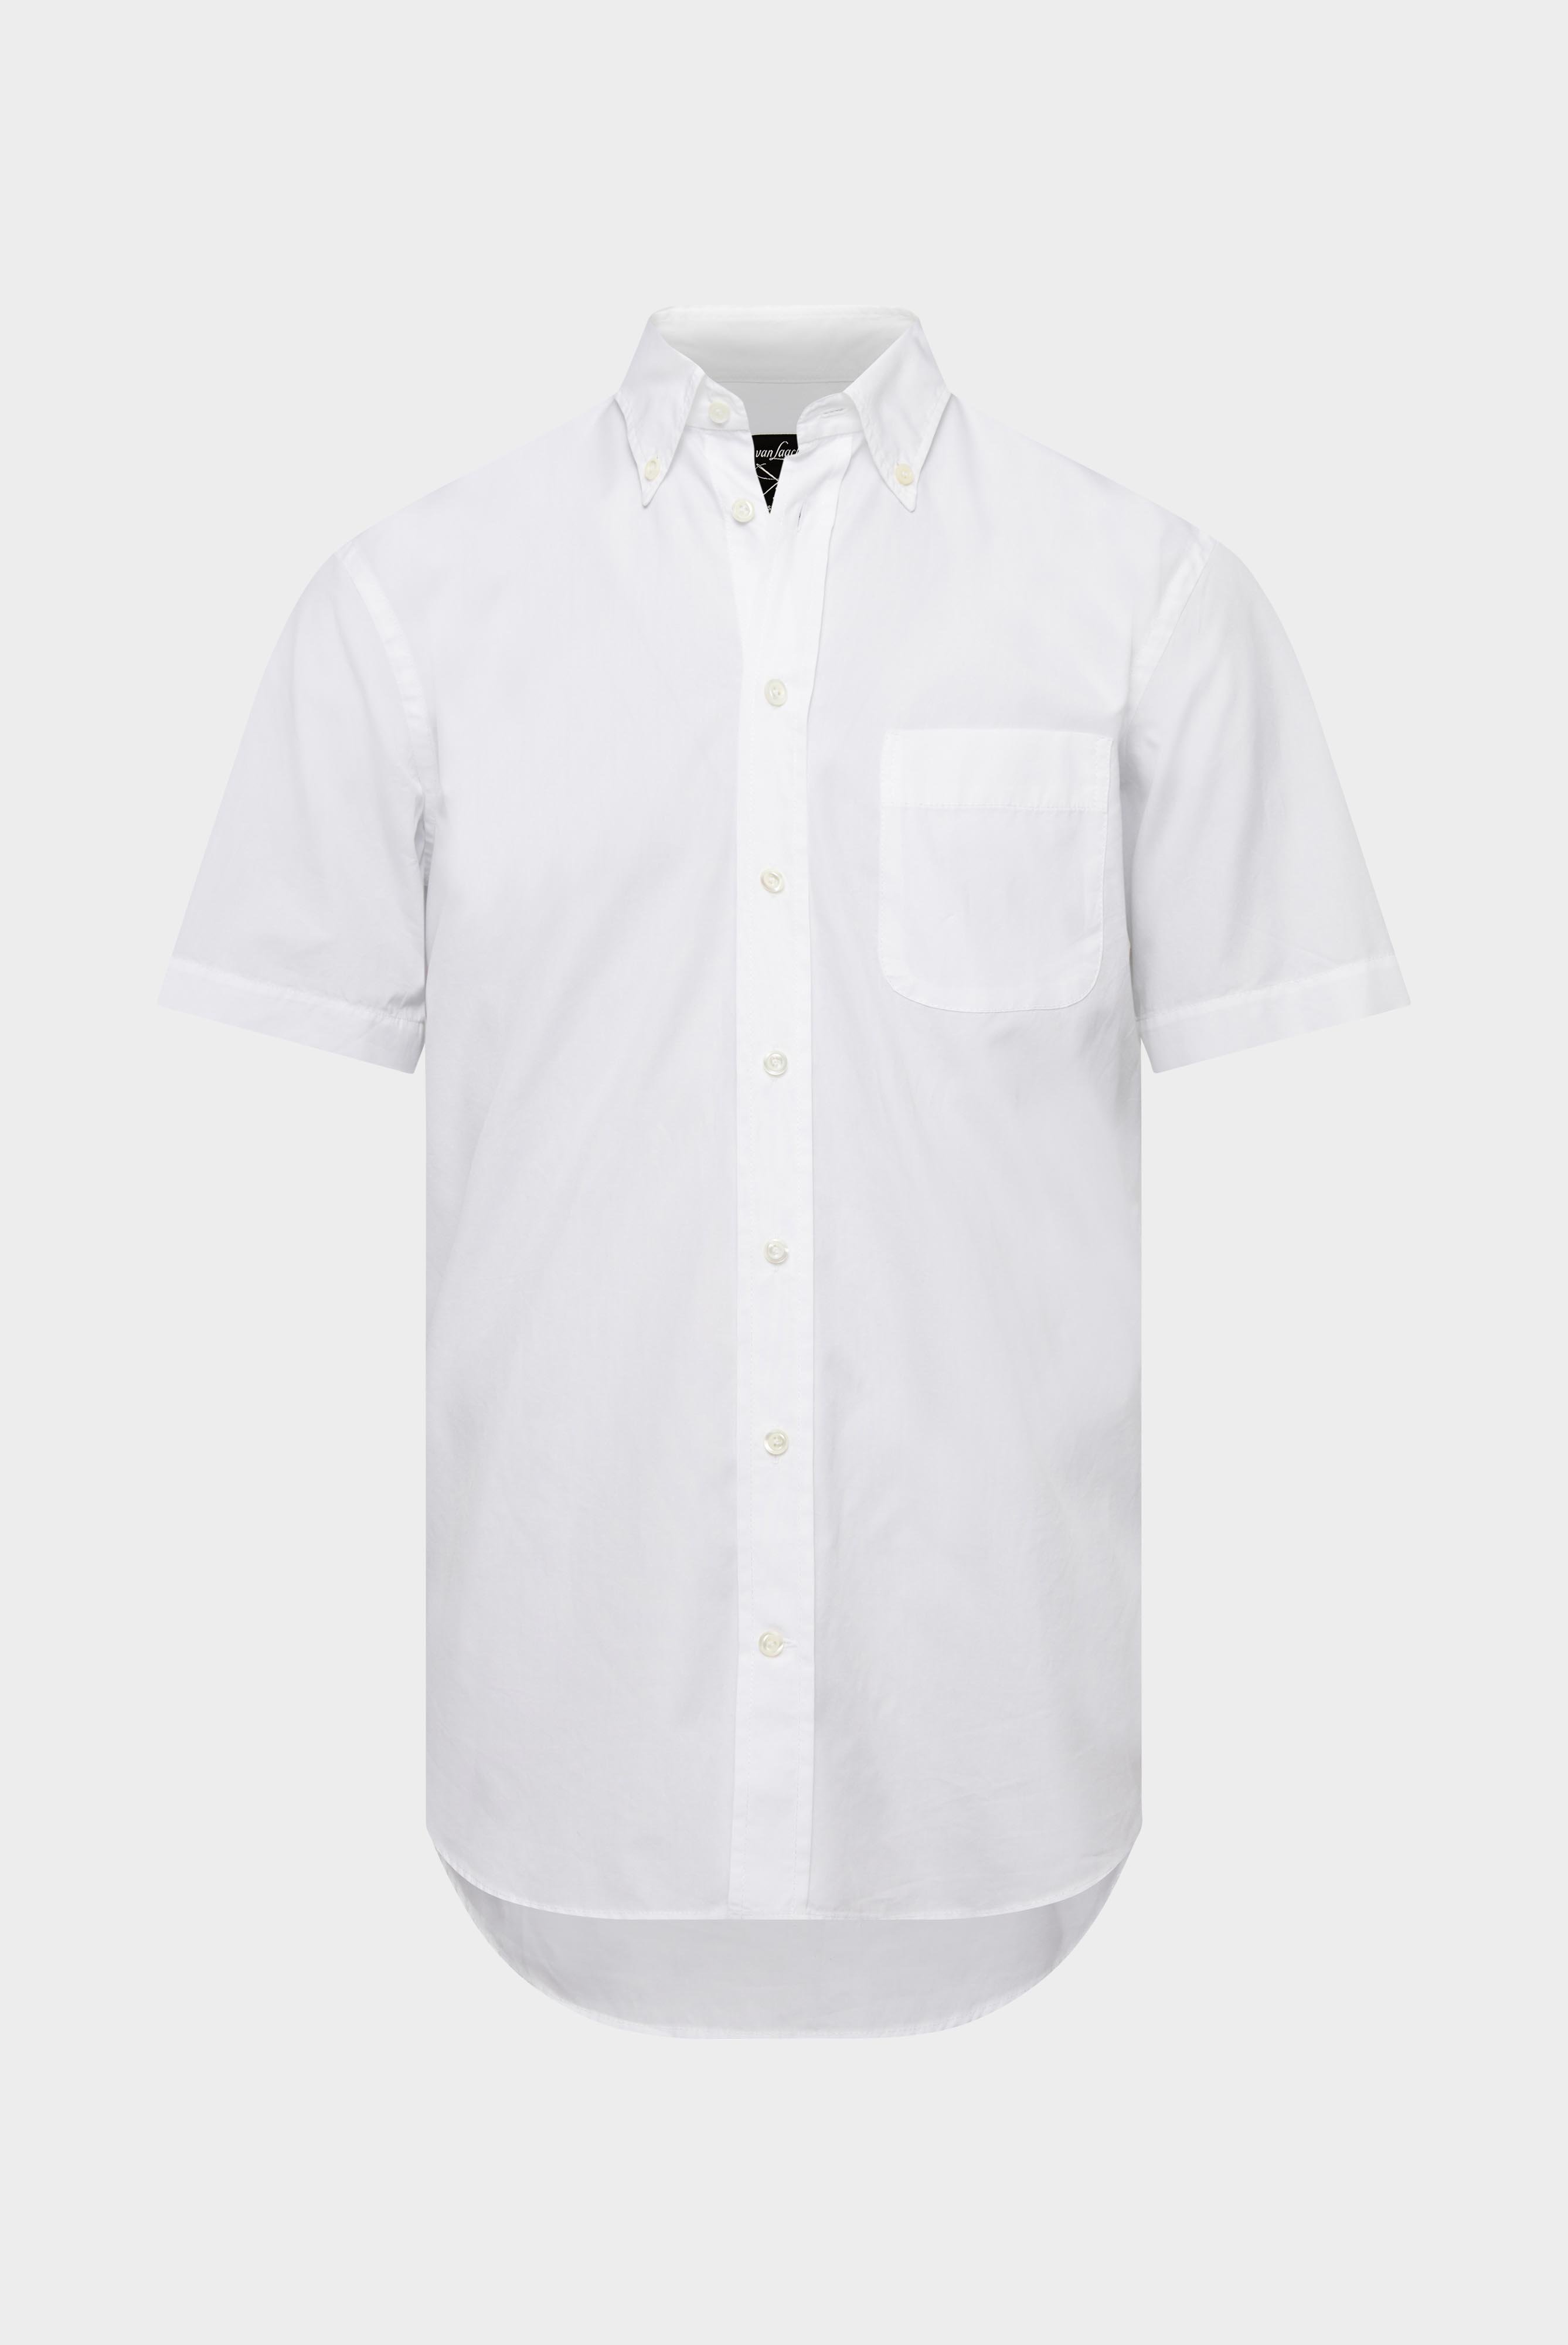 Casual Shirts+Short-sleeved shirt in dark cotton poplin+20.2056.Q2.130648.000.42